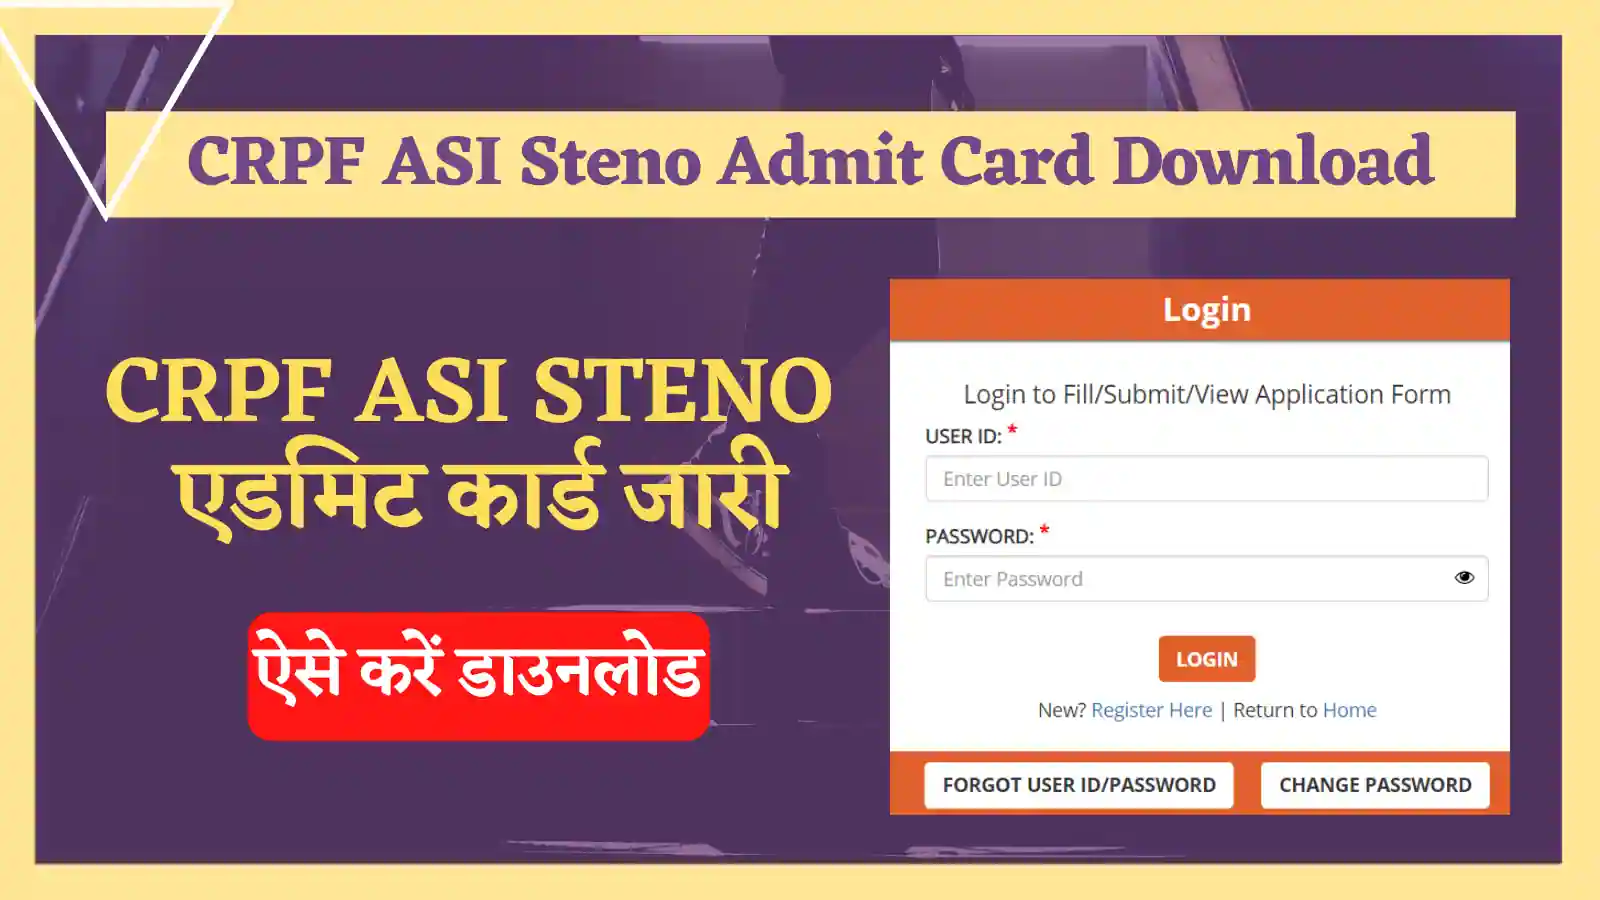 CRPF ASI Steno Admit Card Download